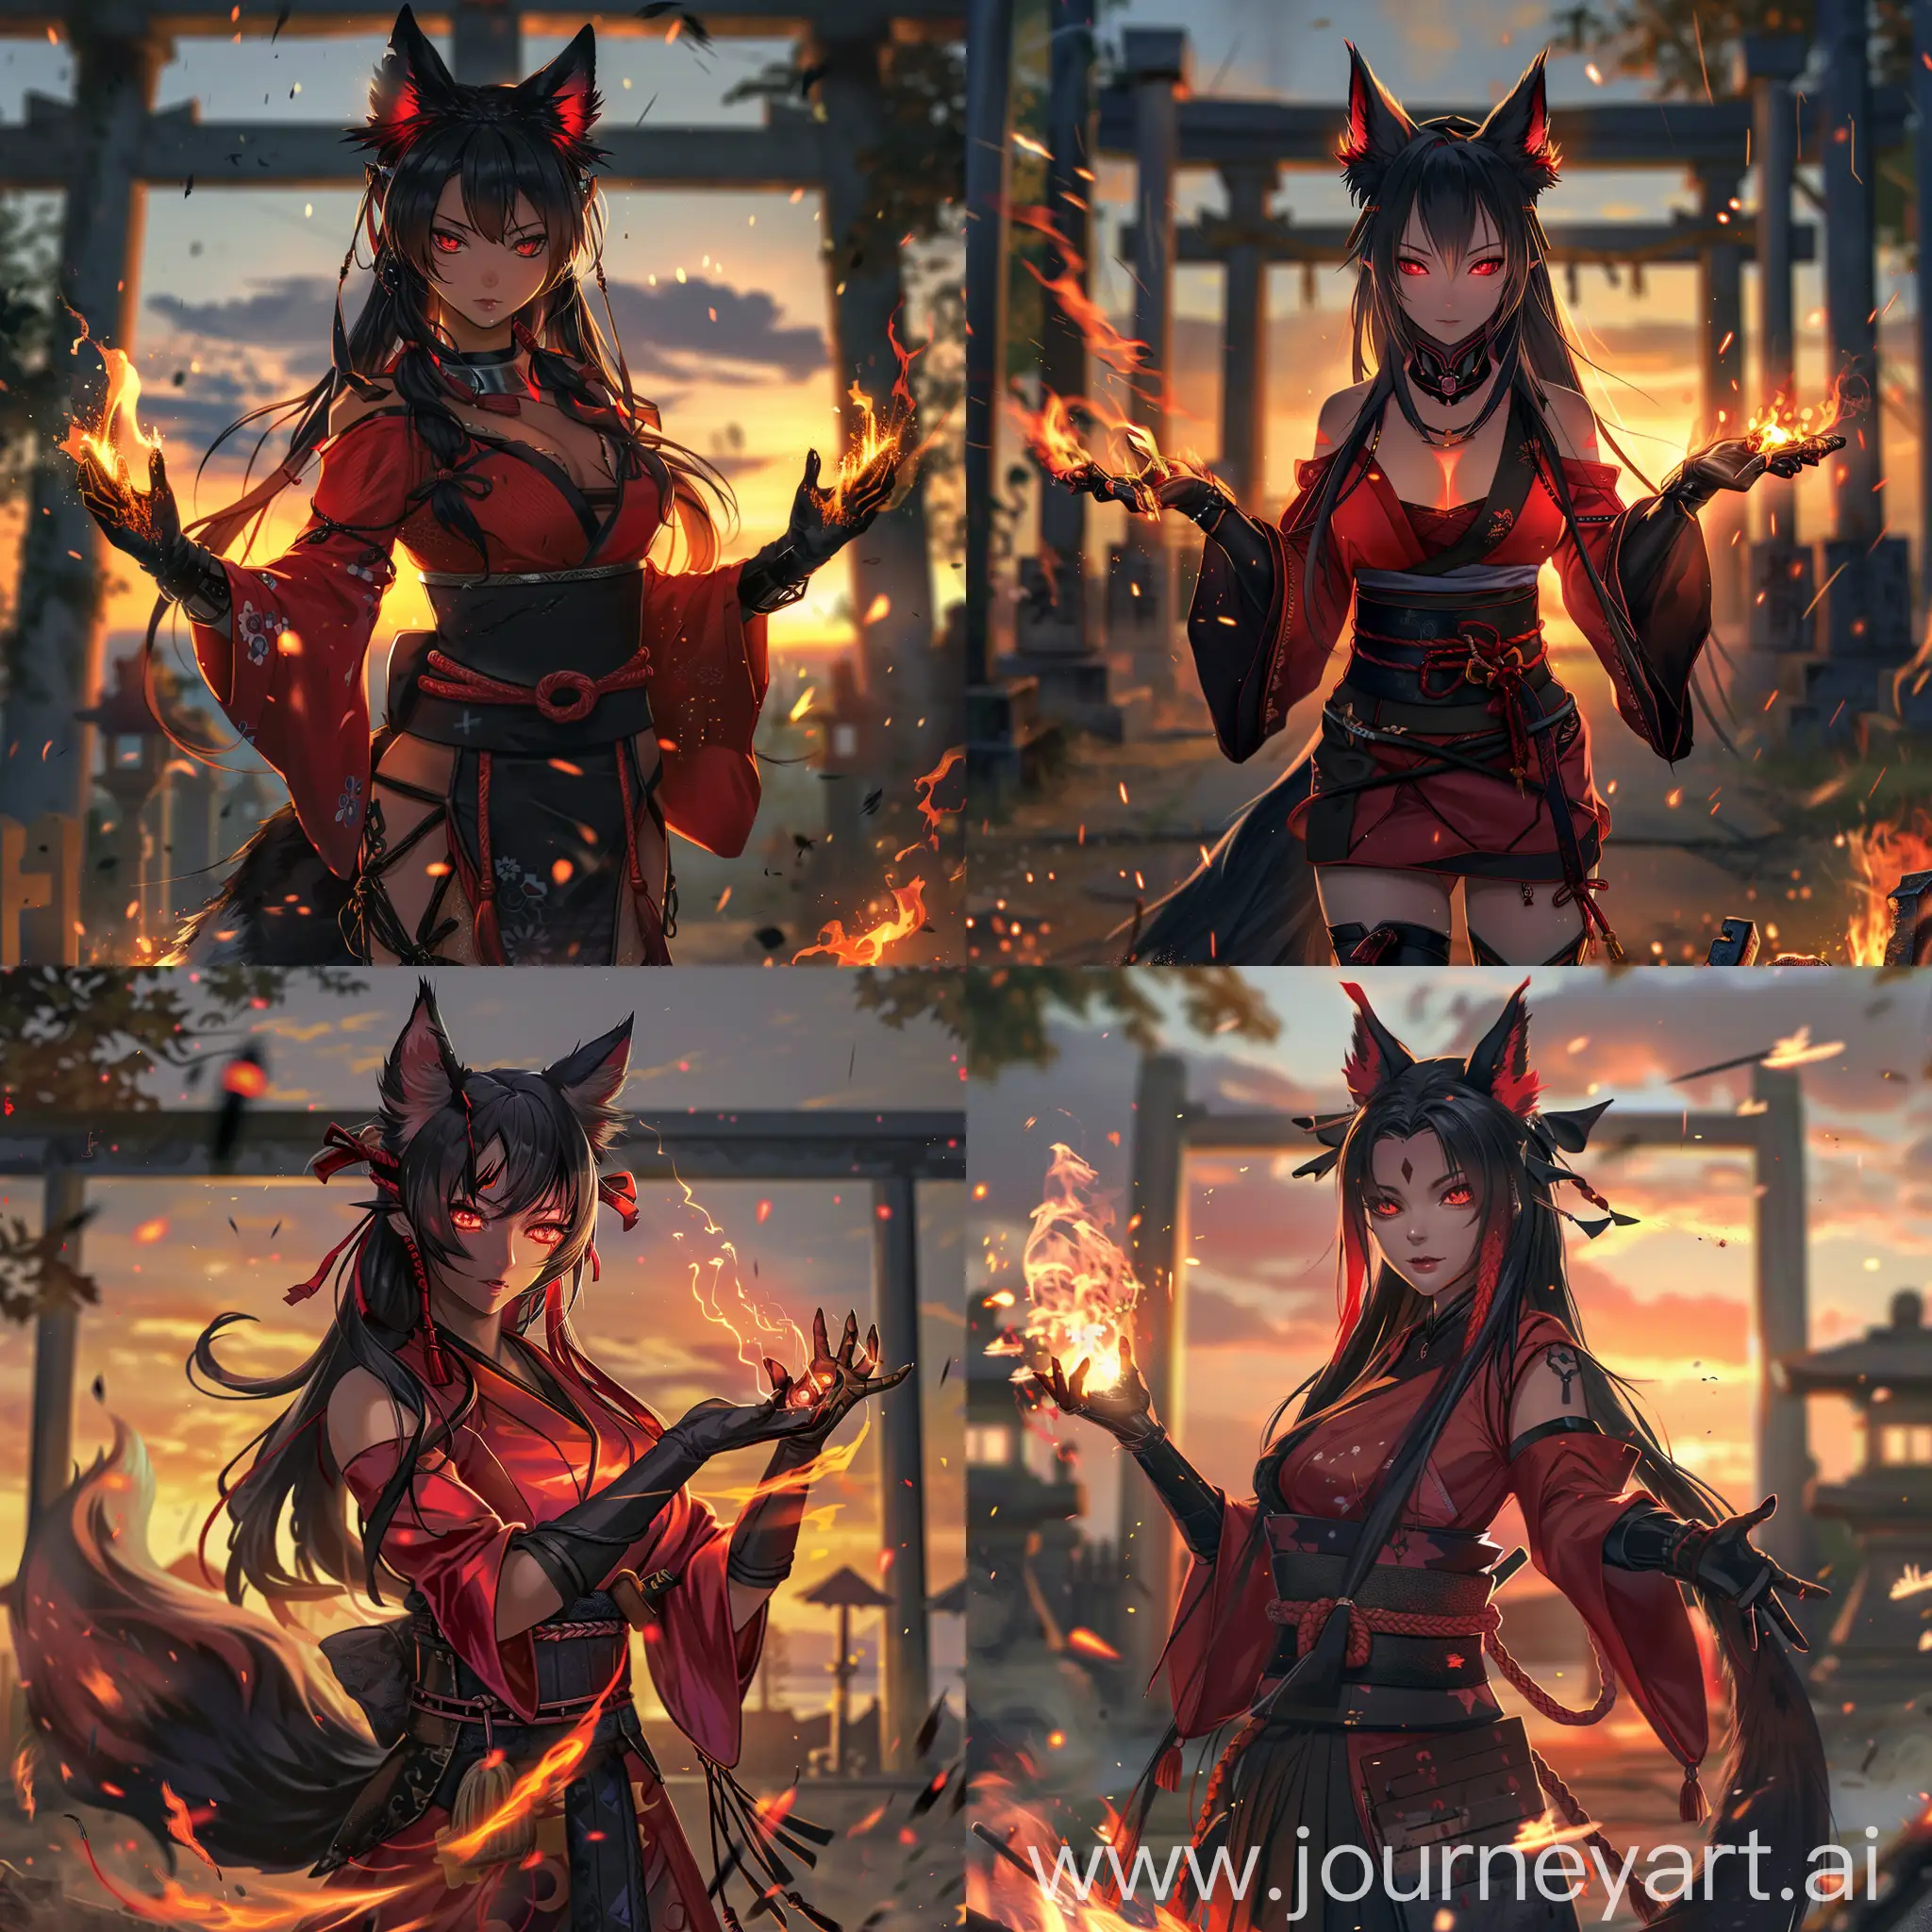 Fiery-Fox-Goddess-Summoning-Fire-Magic-at-Sunset-Shrine